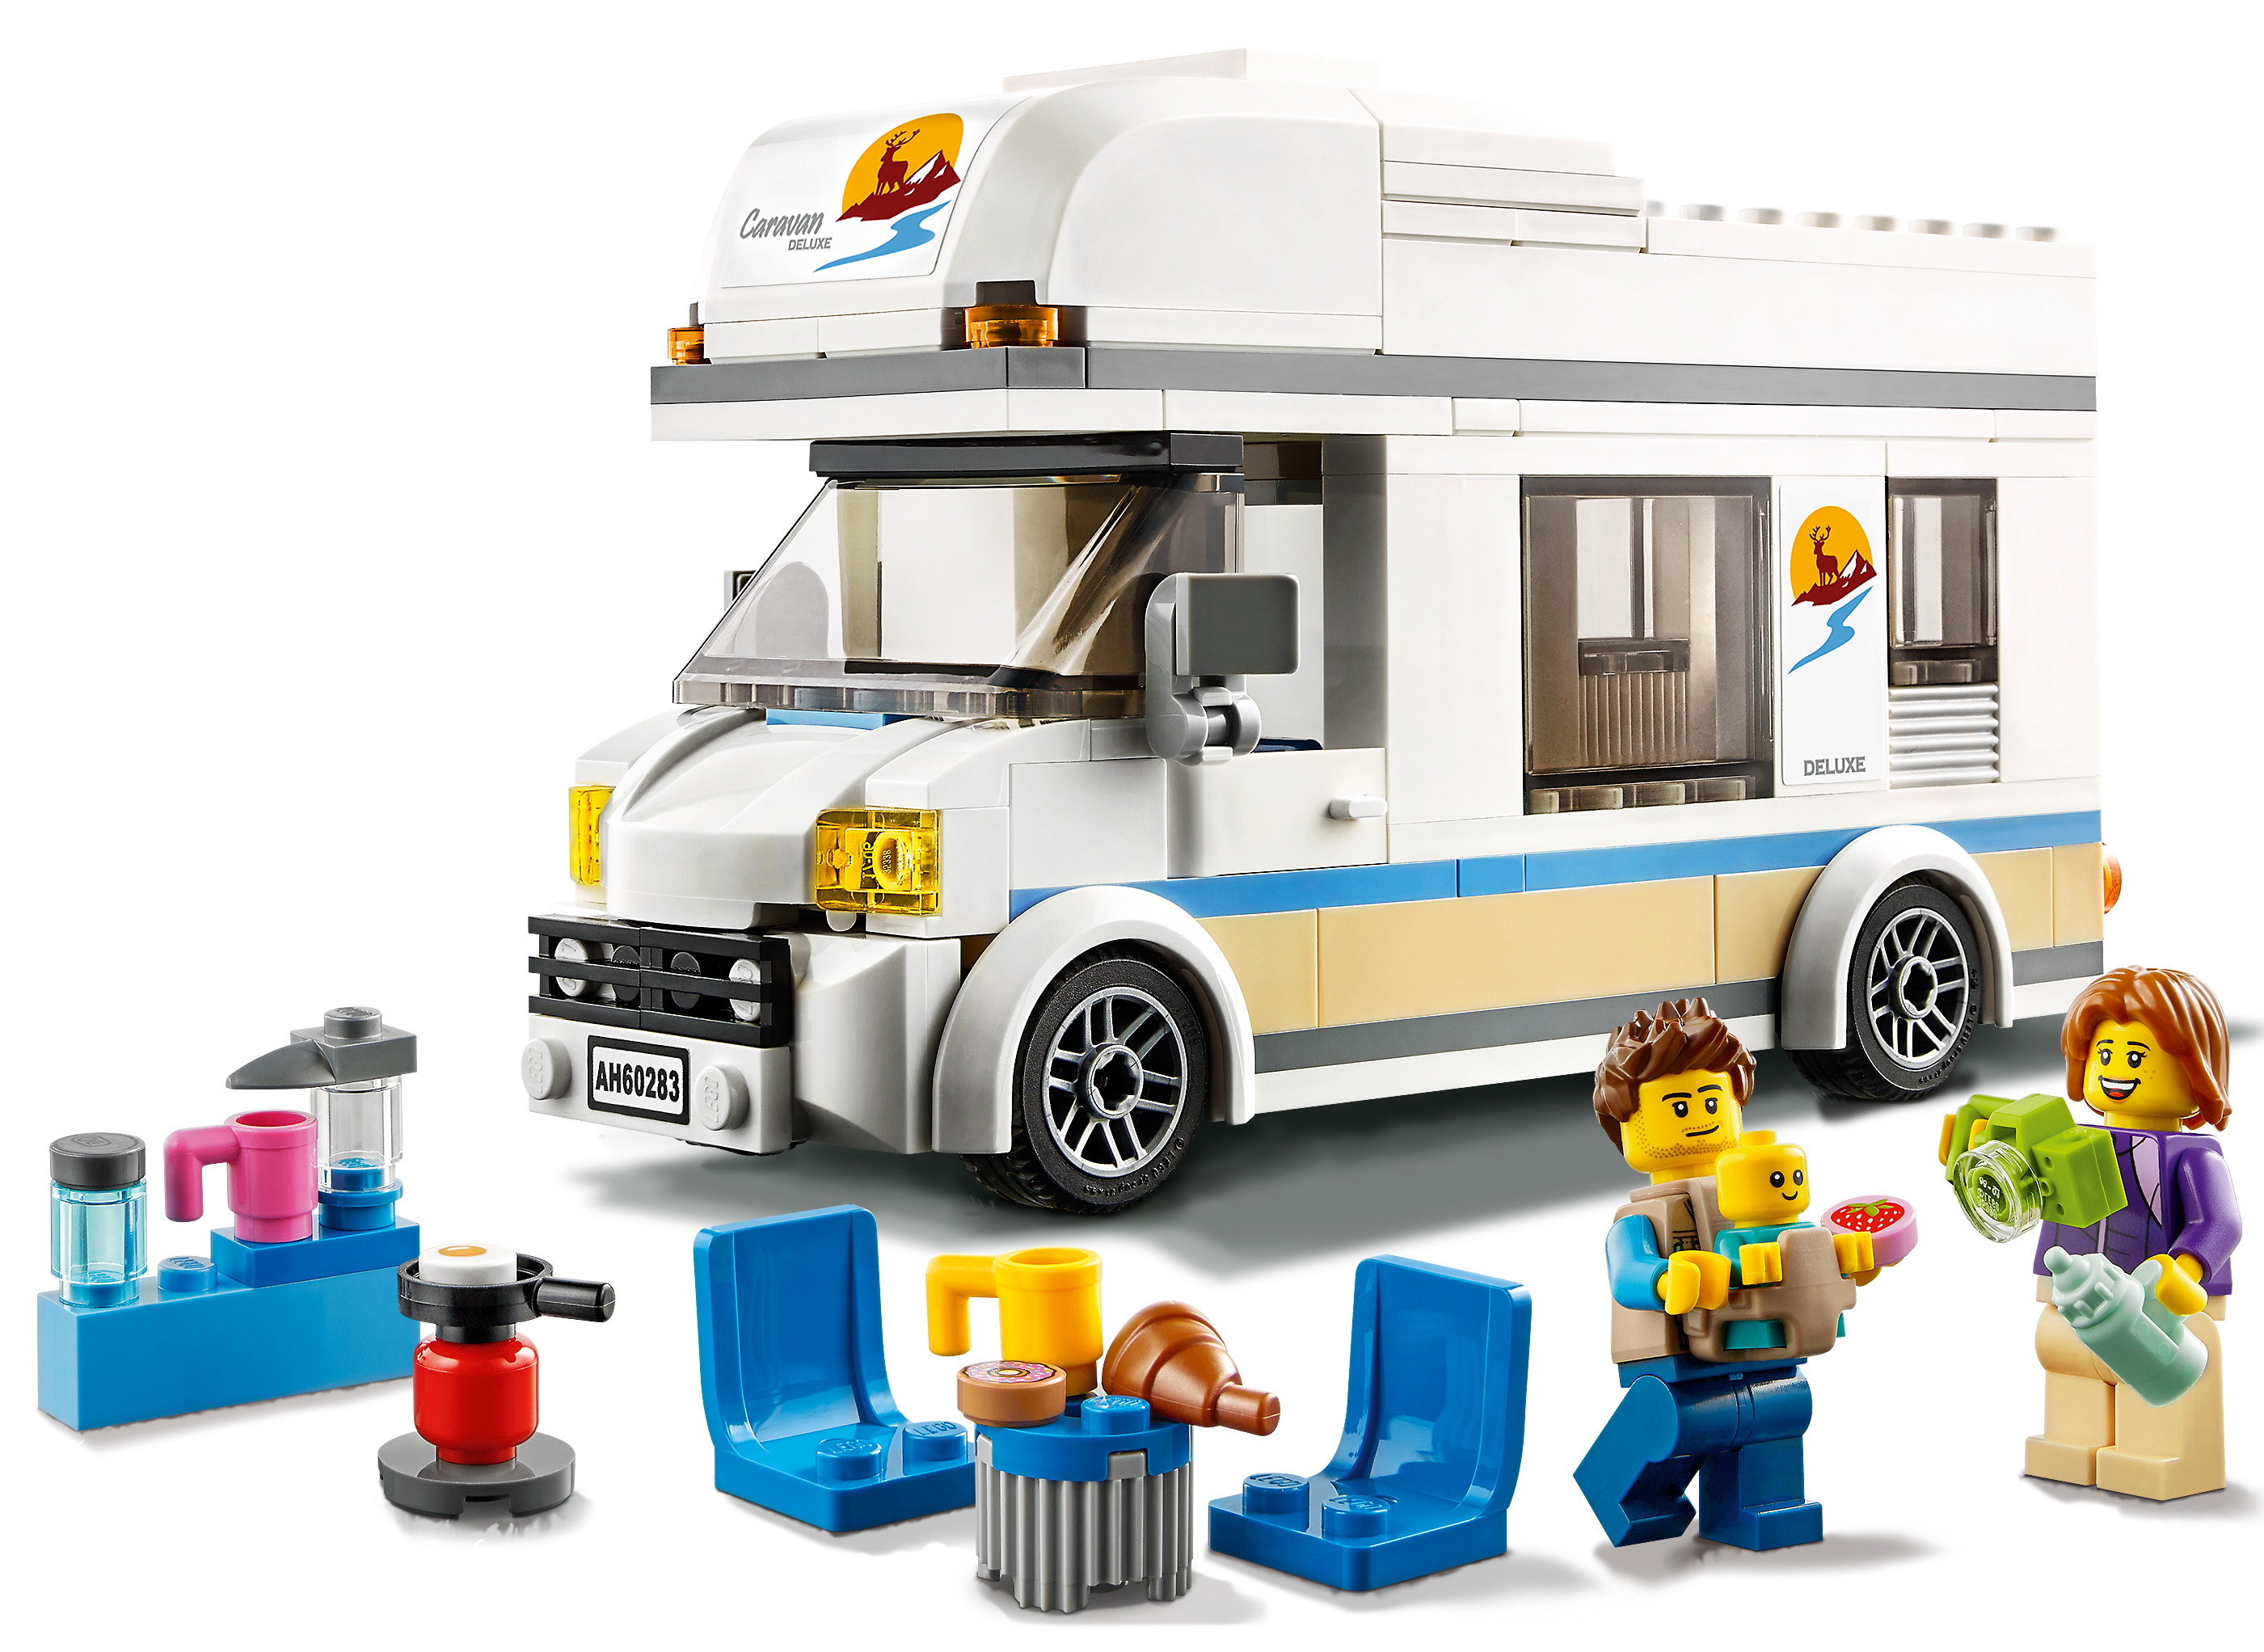 LEGO 60283 City Ferien-wohnmobil Bauset for sale online 